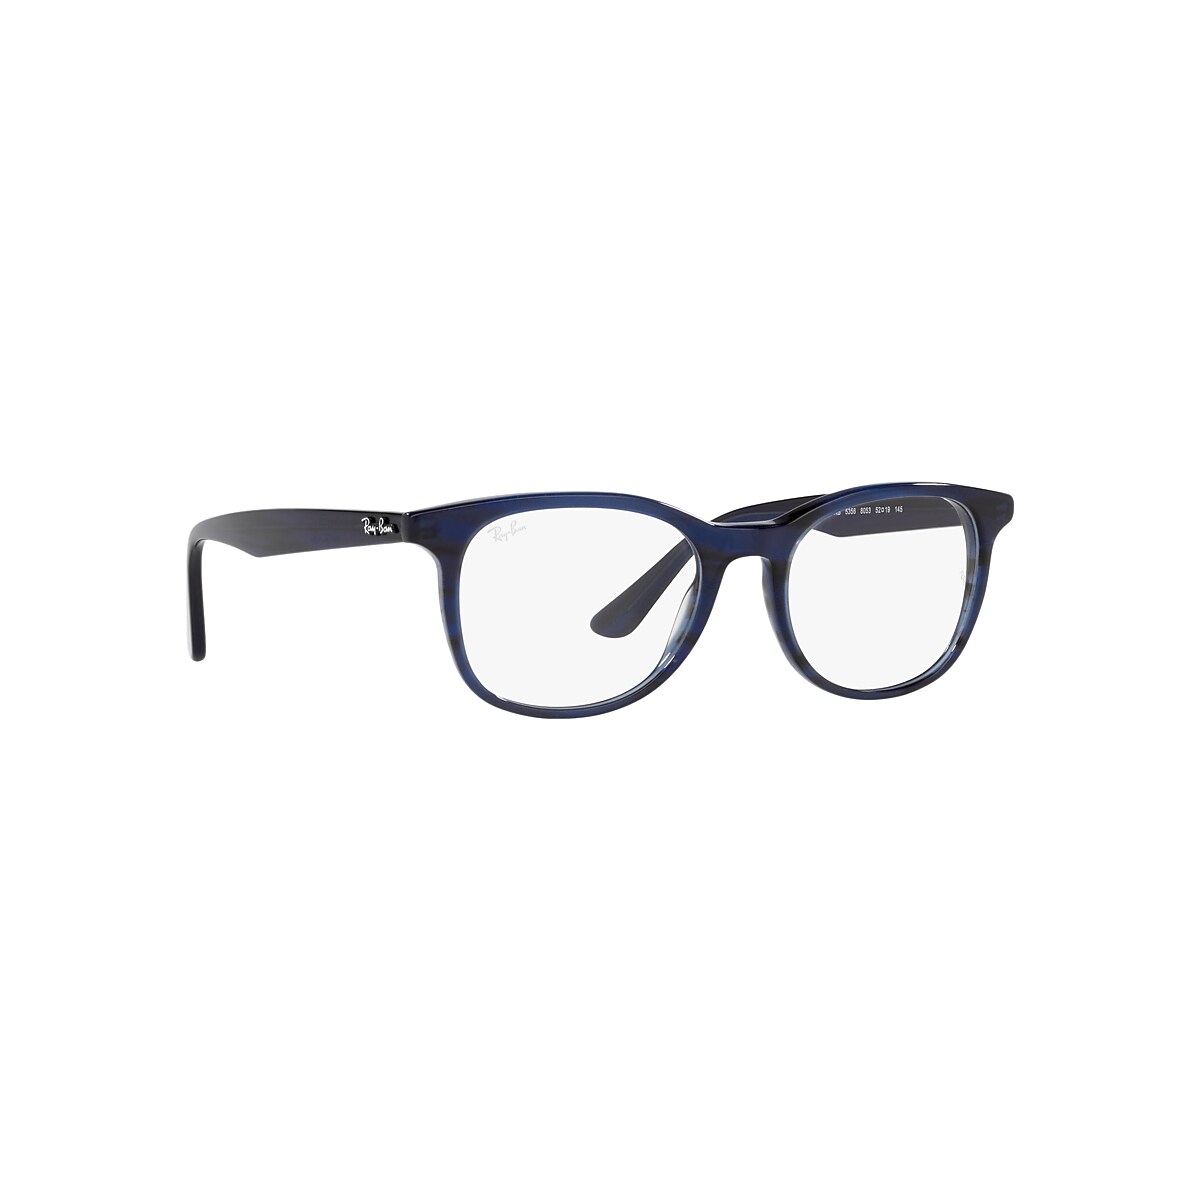 Rb5356 Optics Eyeglasses with Striped Blue Frame | Ray-Ban®